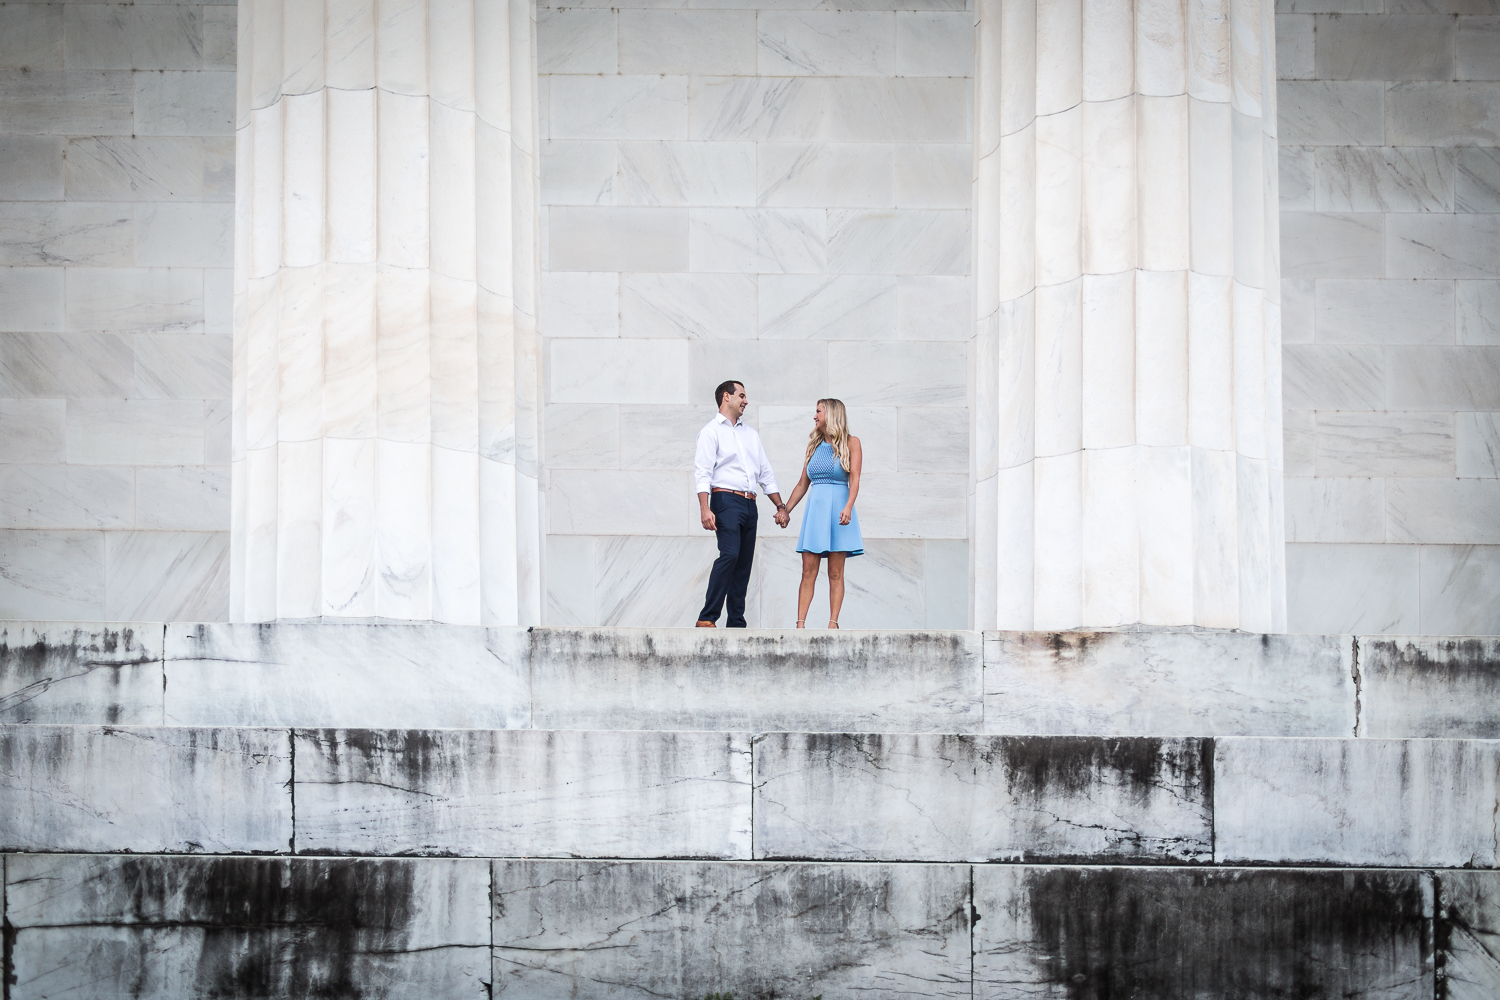 Washington DC Wedding Photographer - Brett Ludeke Photography, Based in Washington DC. 